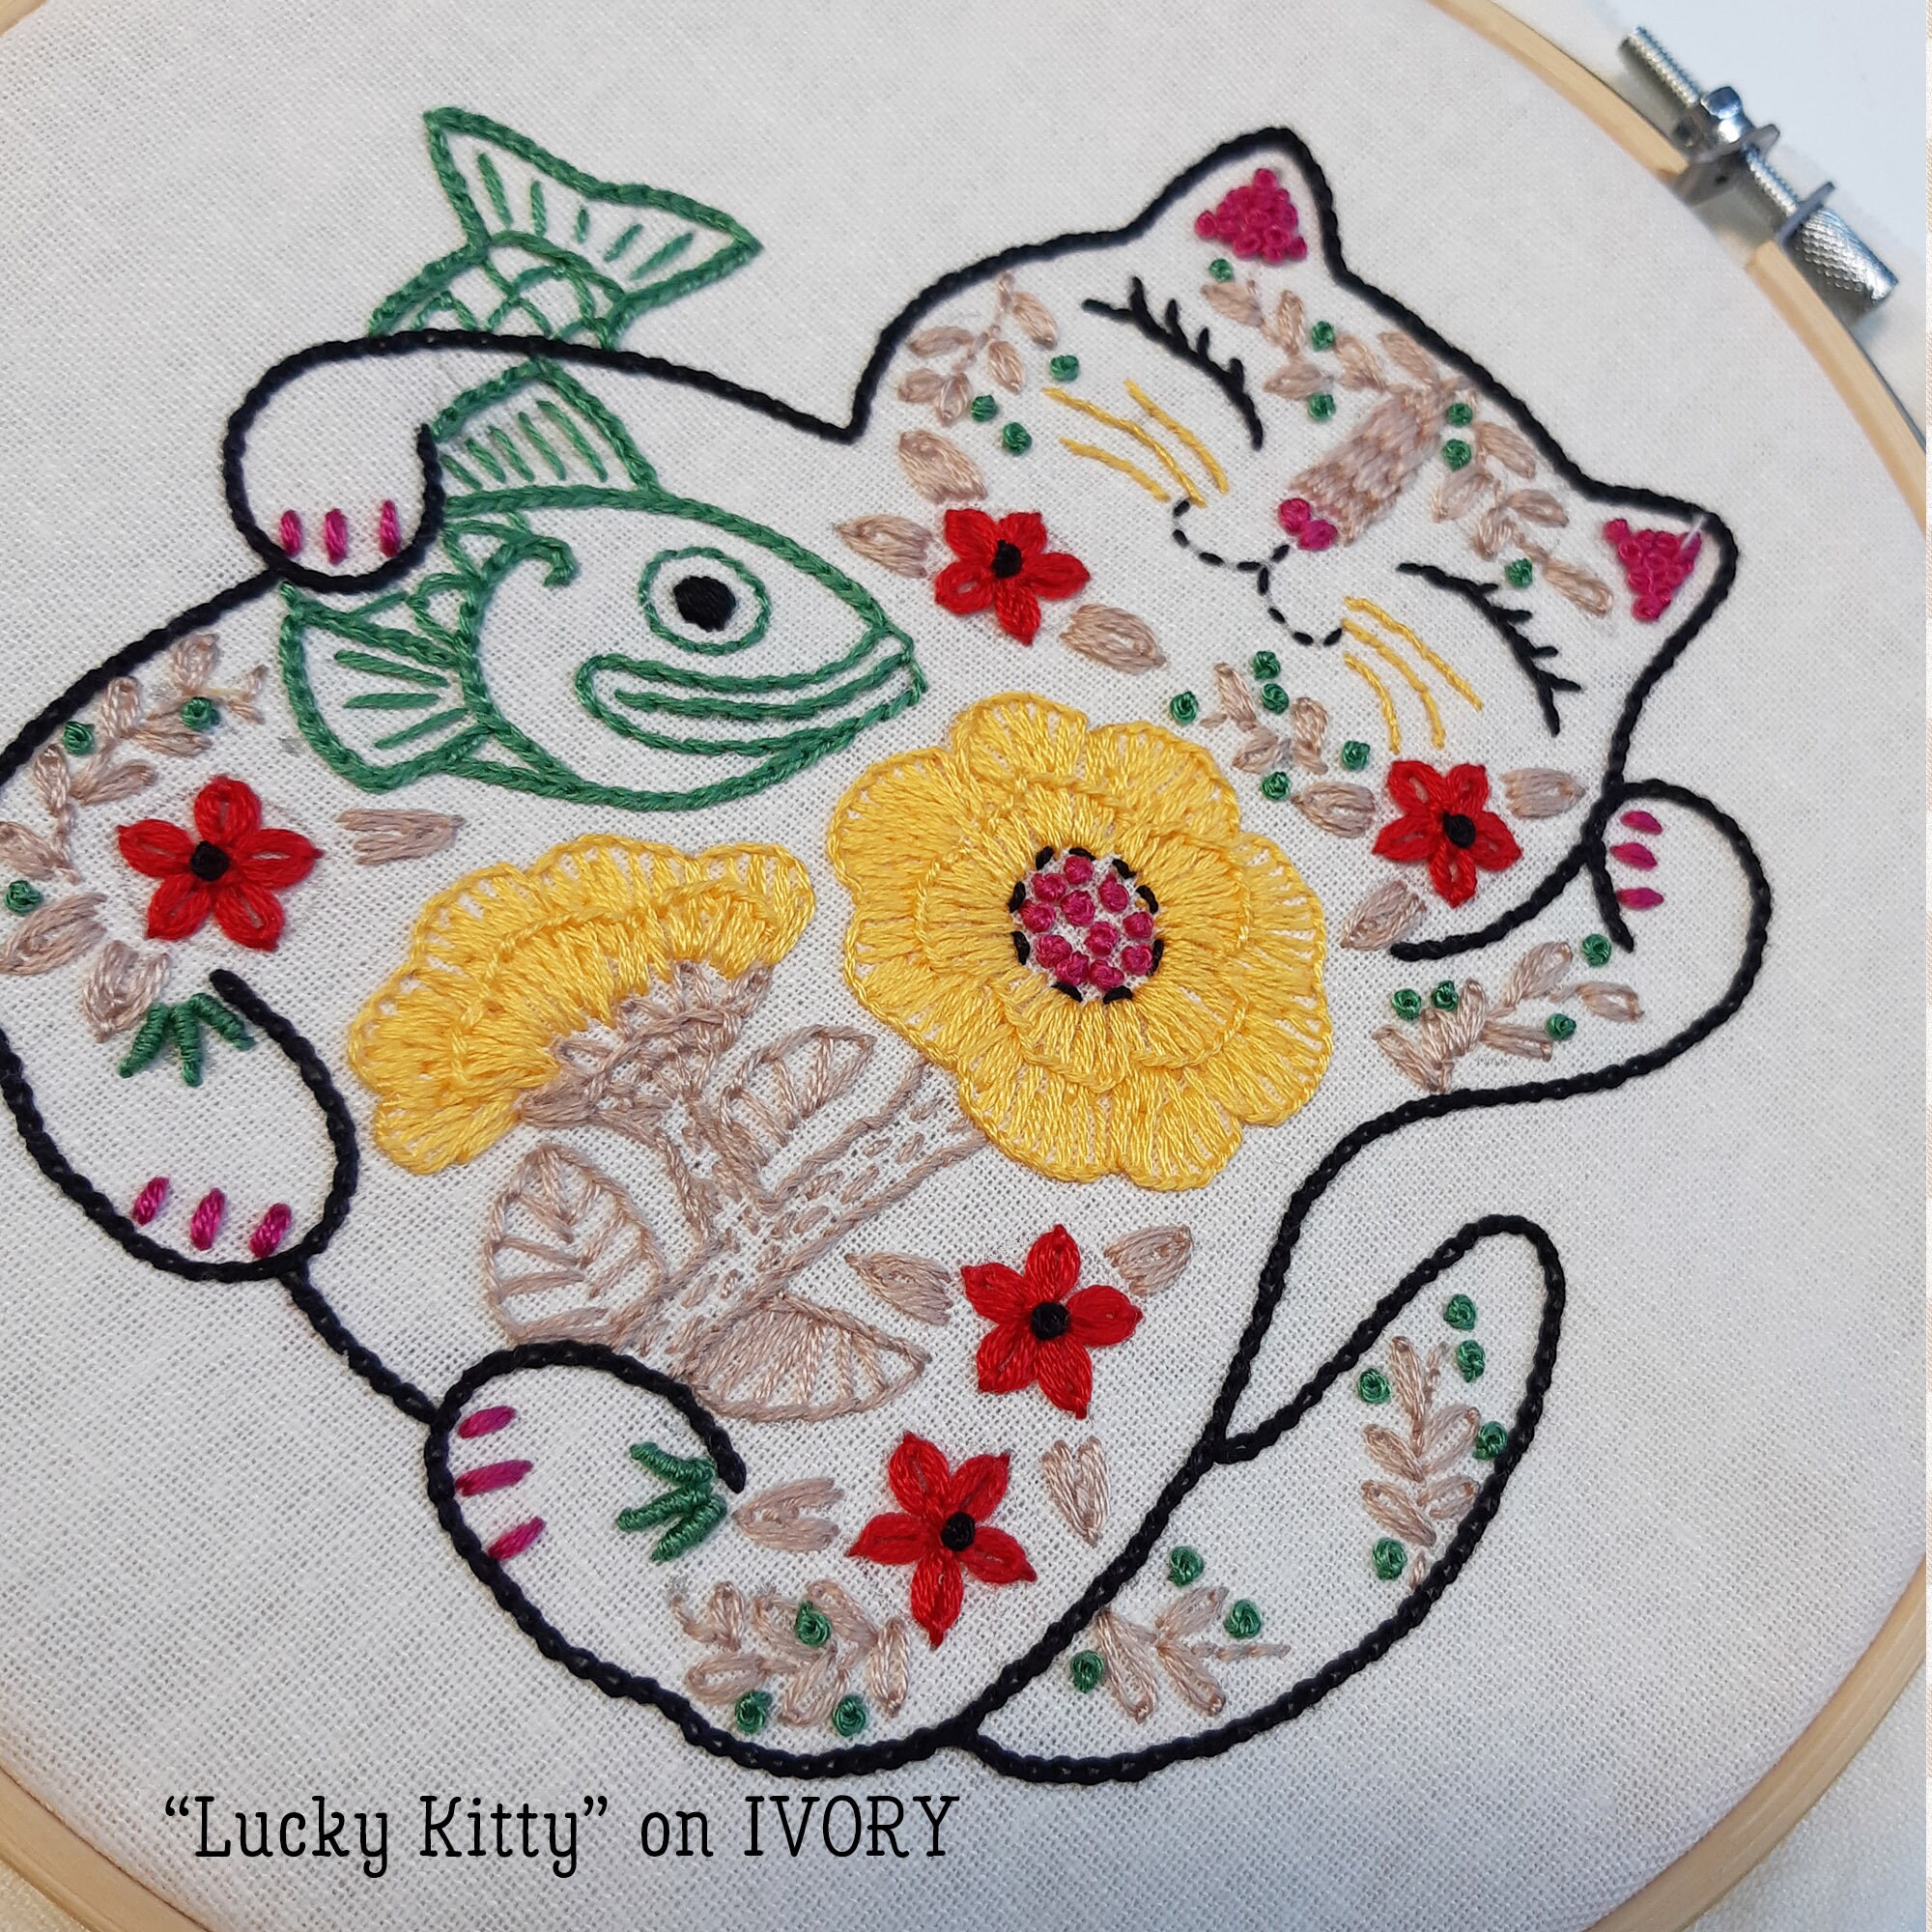 Hand Embroidery Kit Maneki Neko Cat Design Lucky Needlepoint Kitty Pattern  Welcome Gift Japanese Hoop Art 